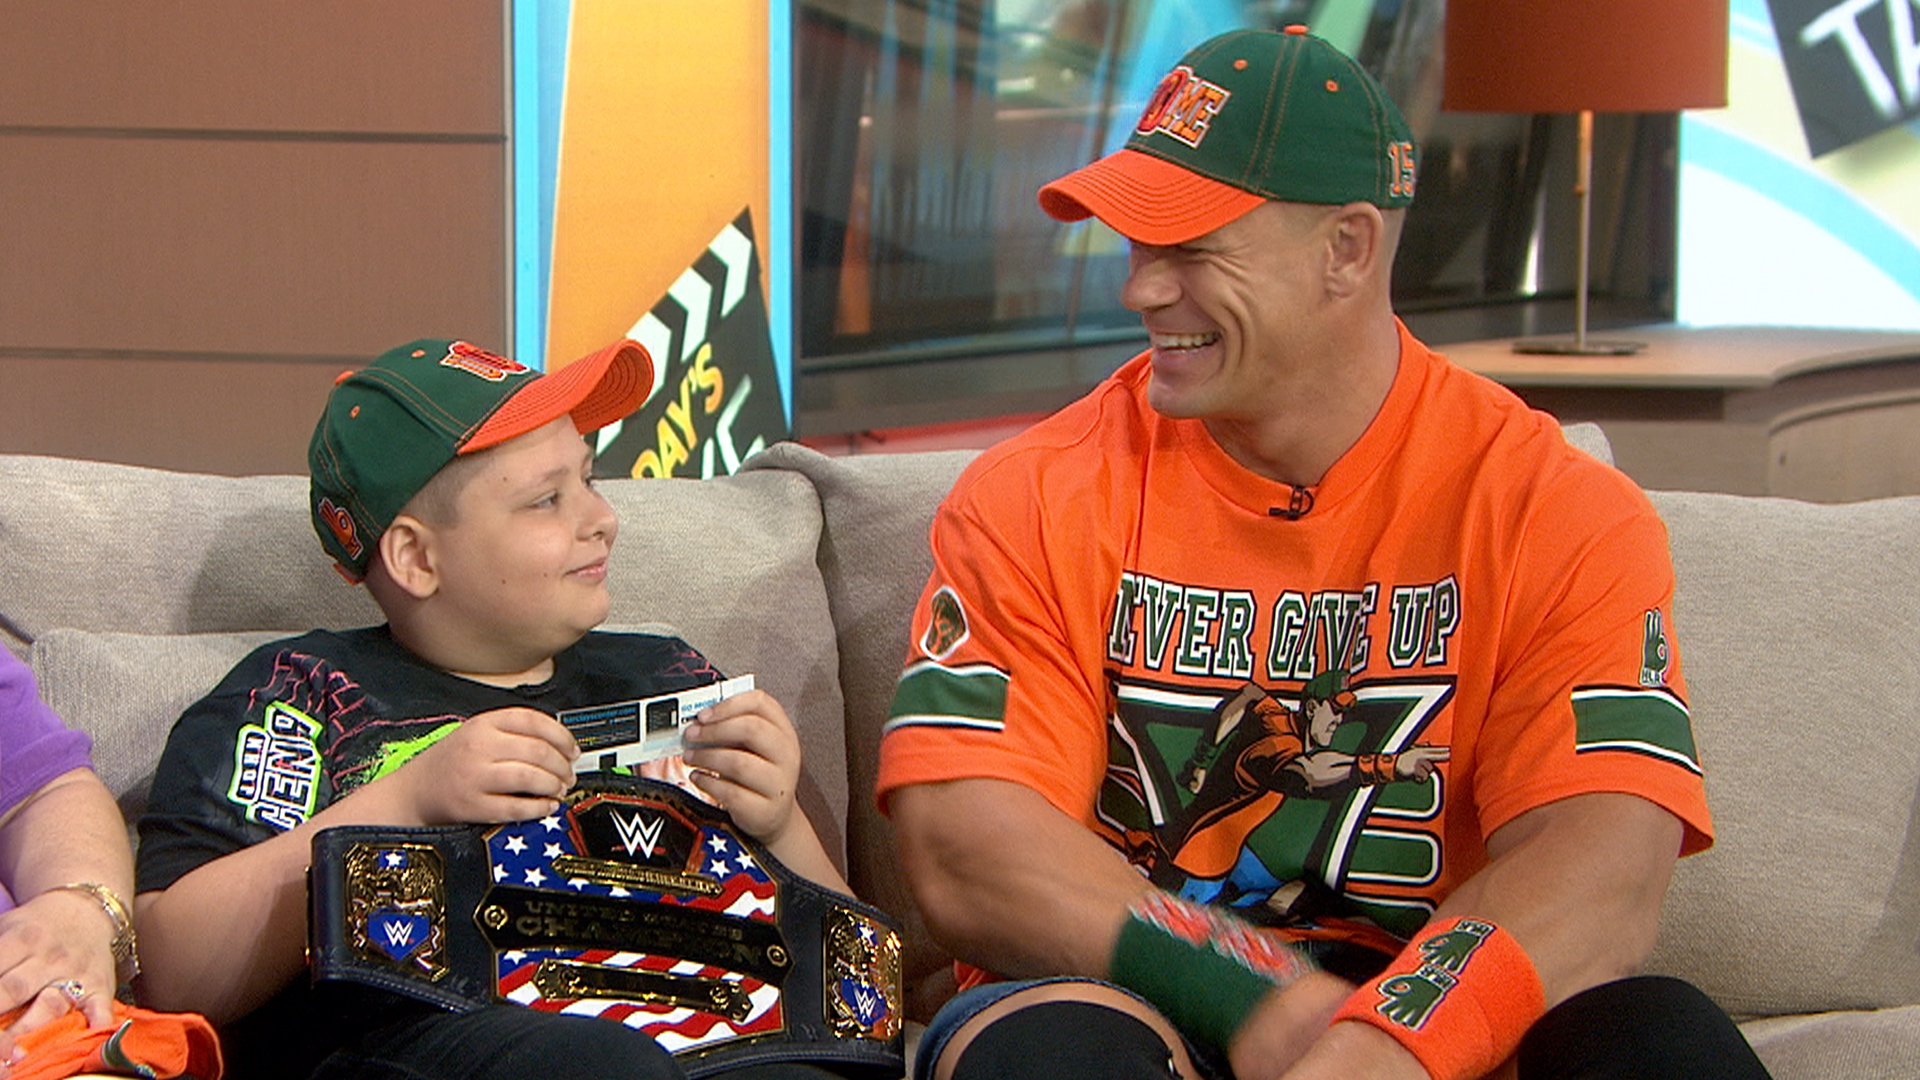 John Cena surprises and inspires boy battling leukemia.